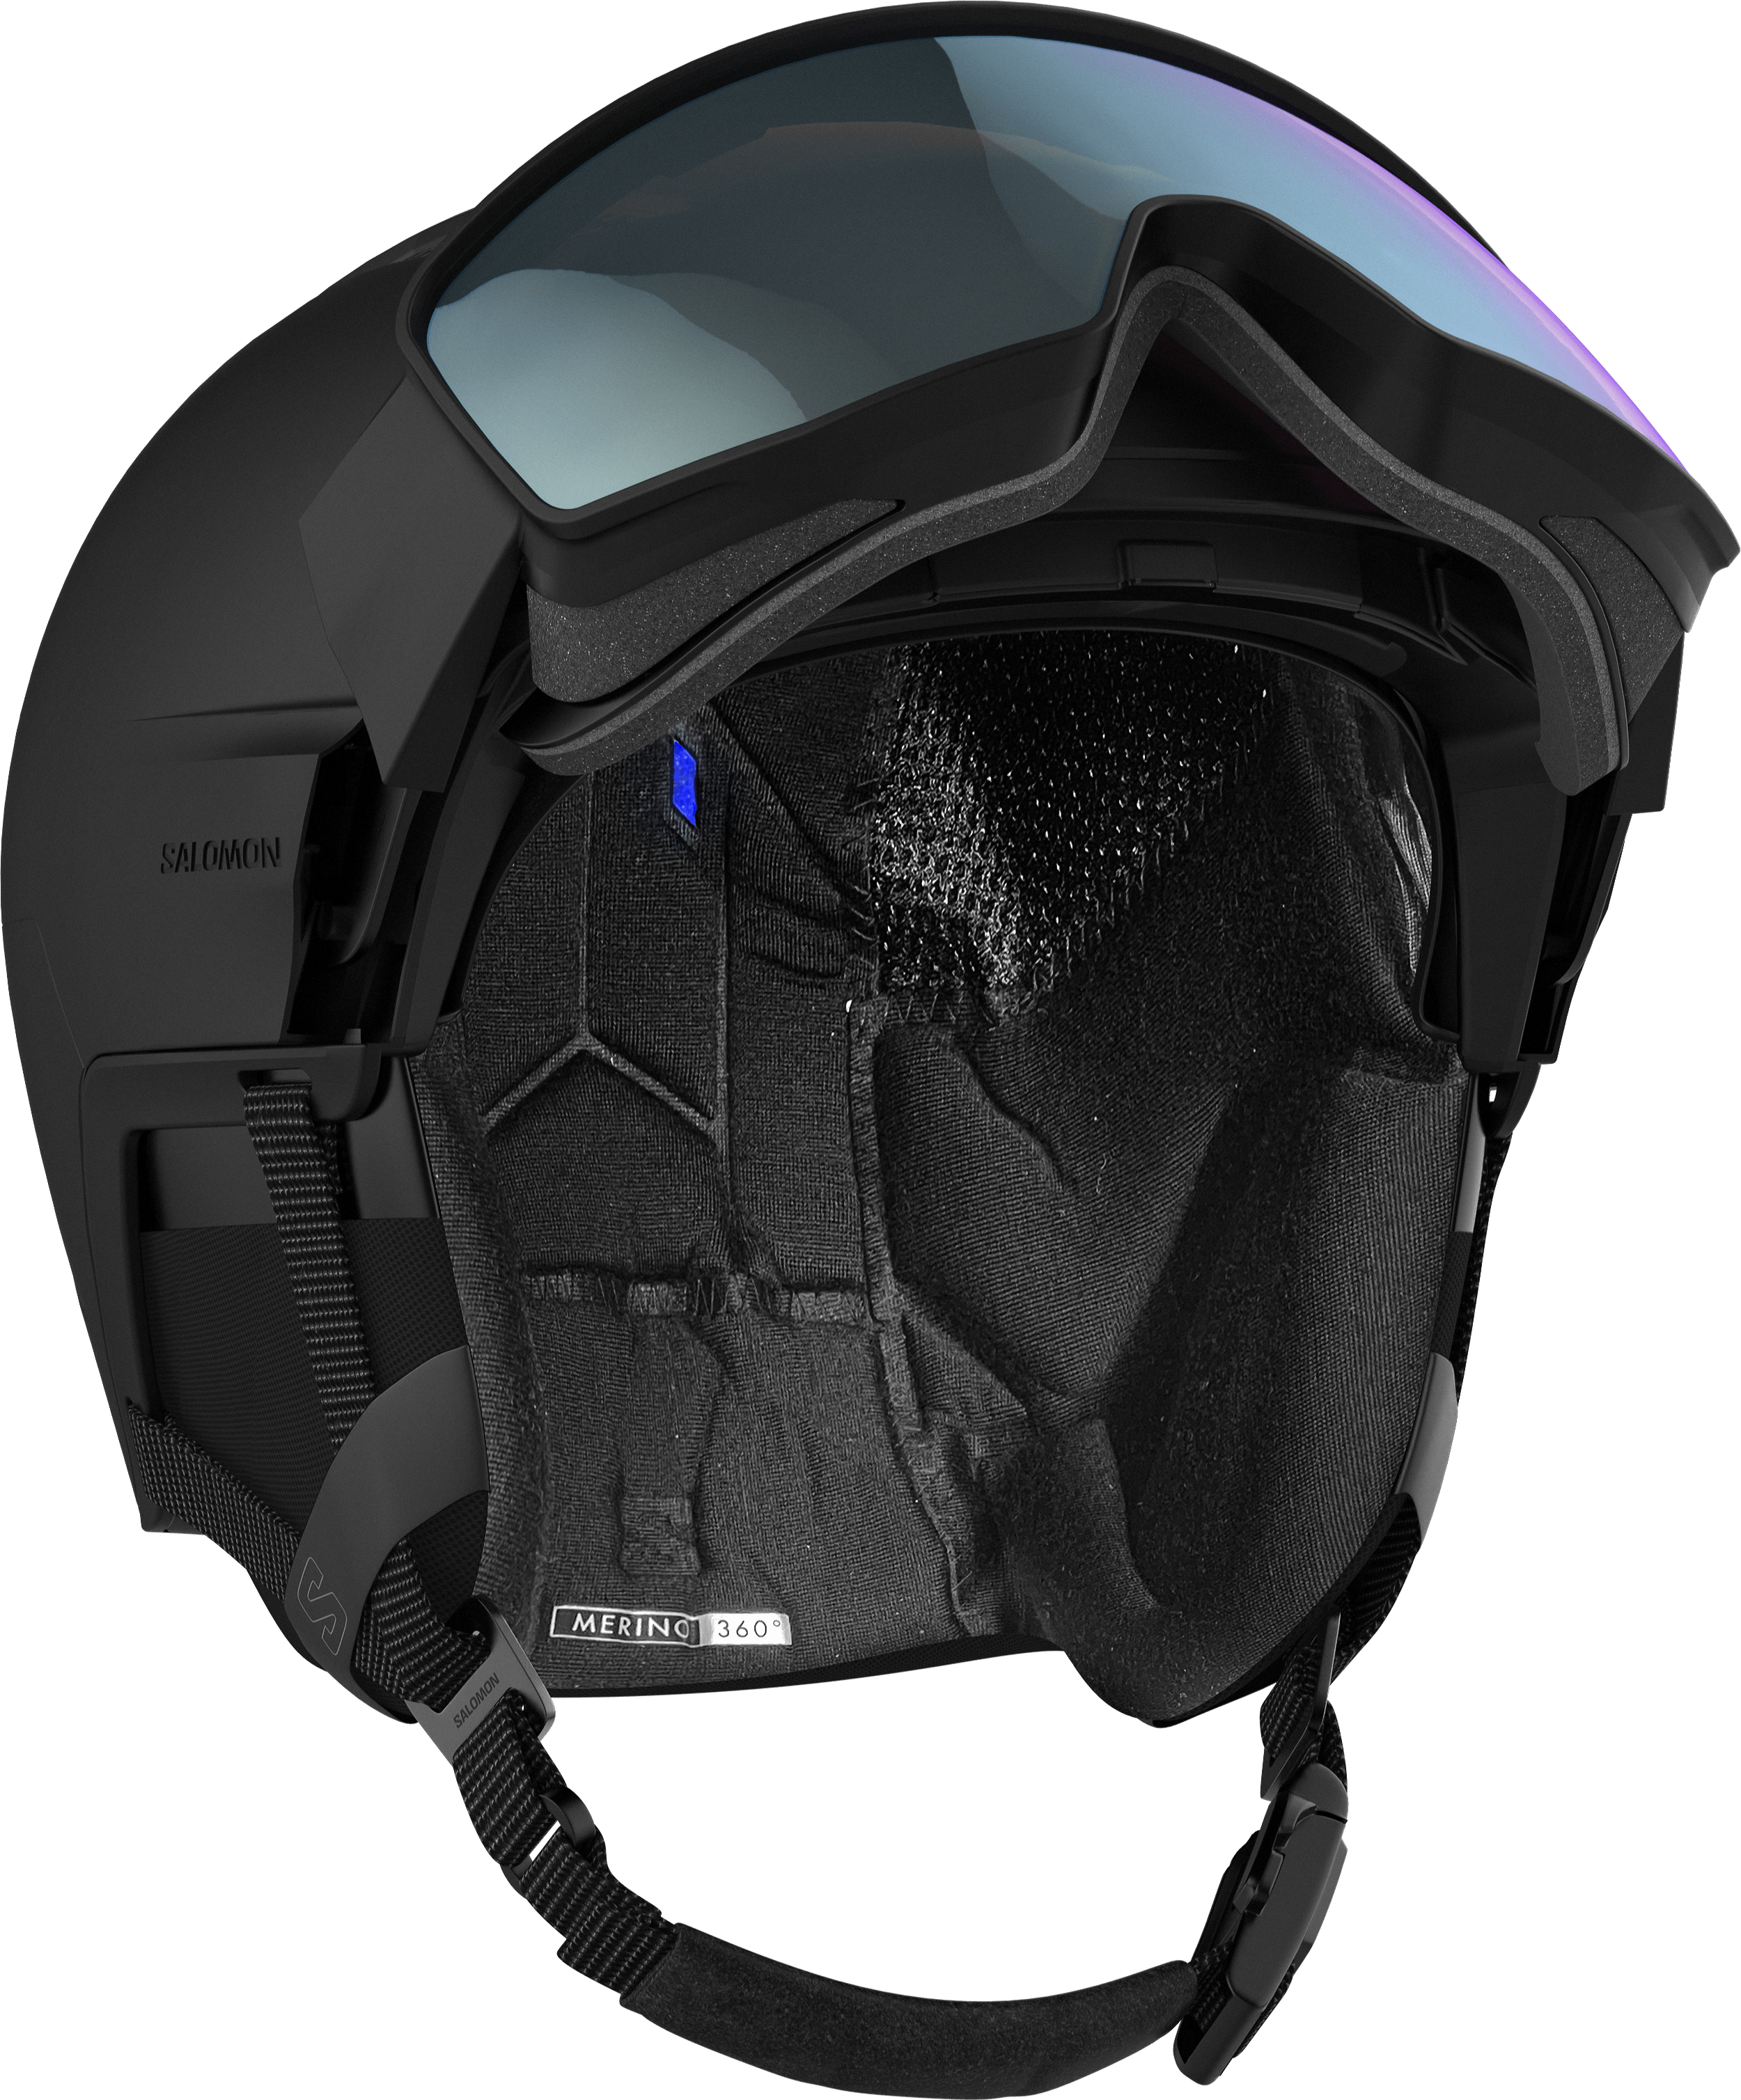 Salomon Driver Prime Sigma Plus Ski Helmet Review 